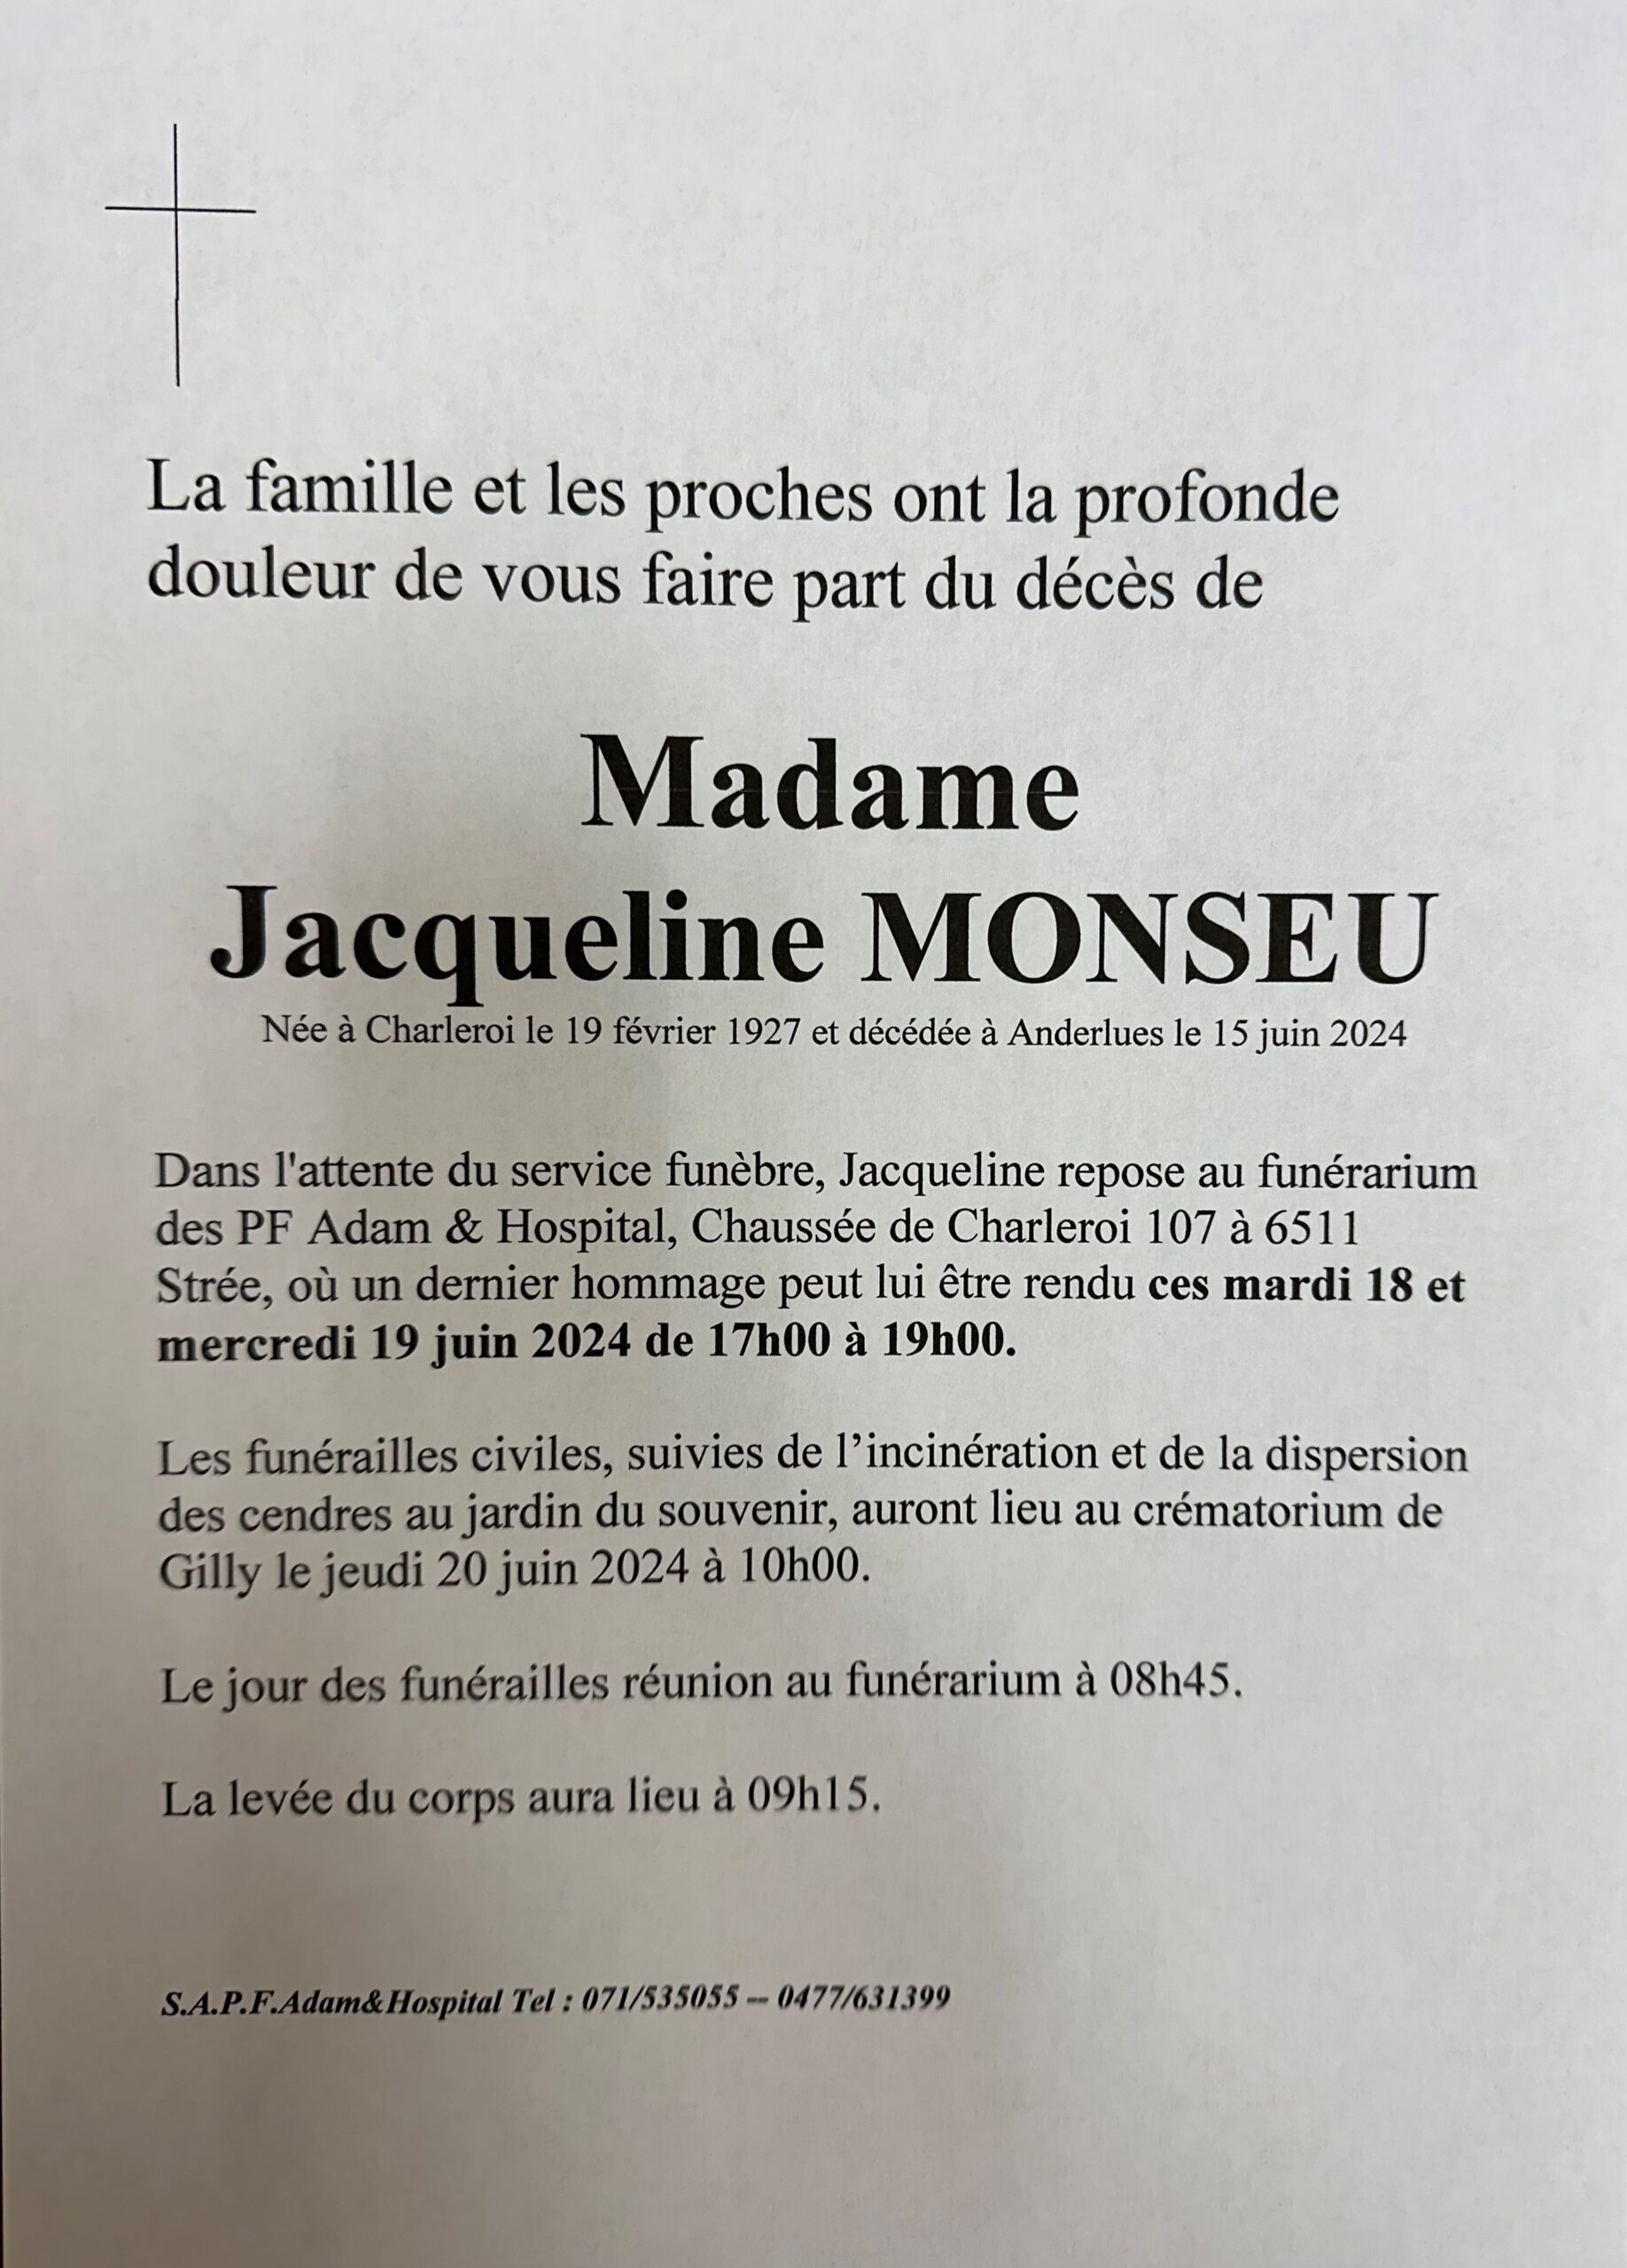 Jacqueline MONSEU scaled | Funérailles Adam Hospital